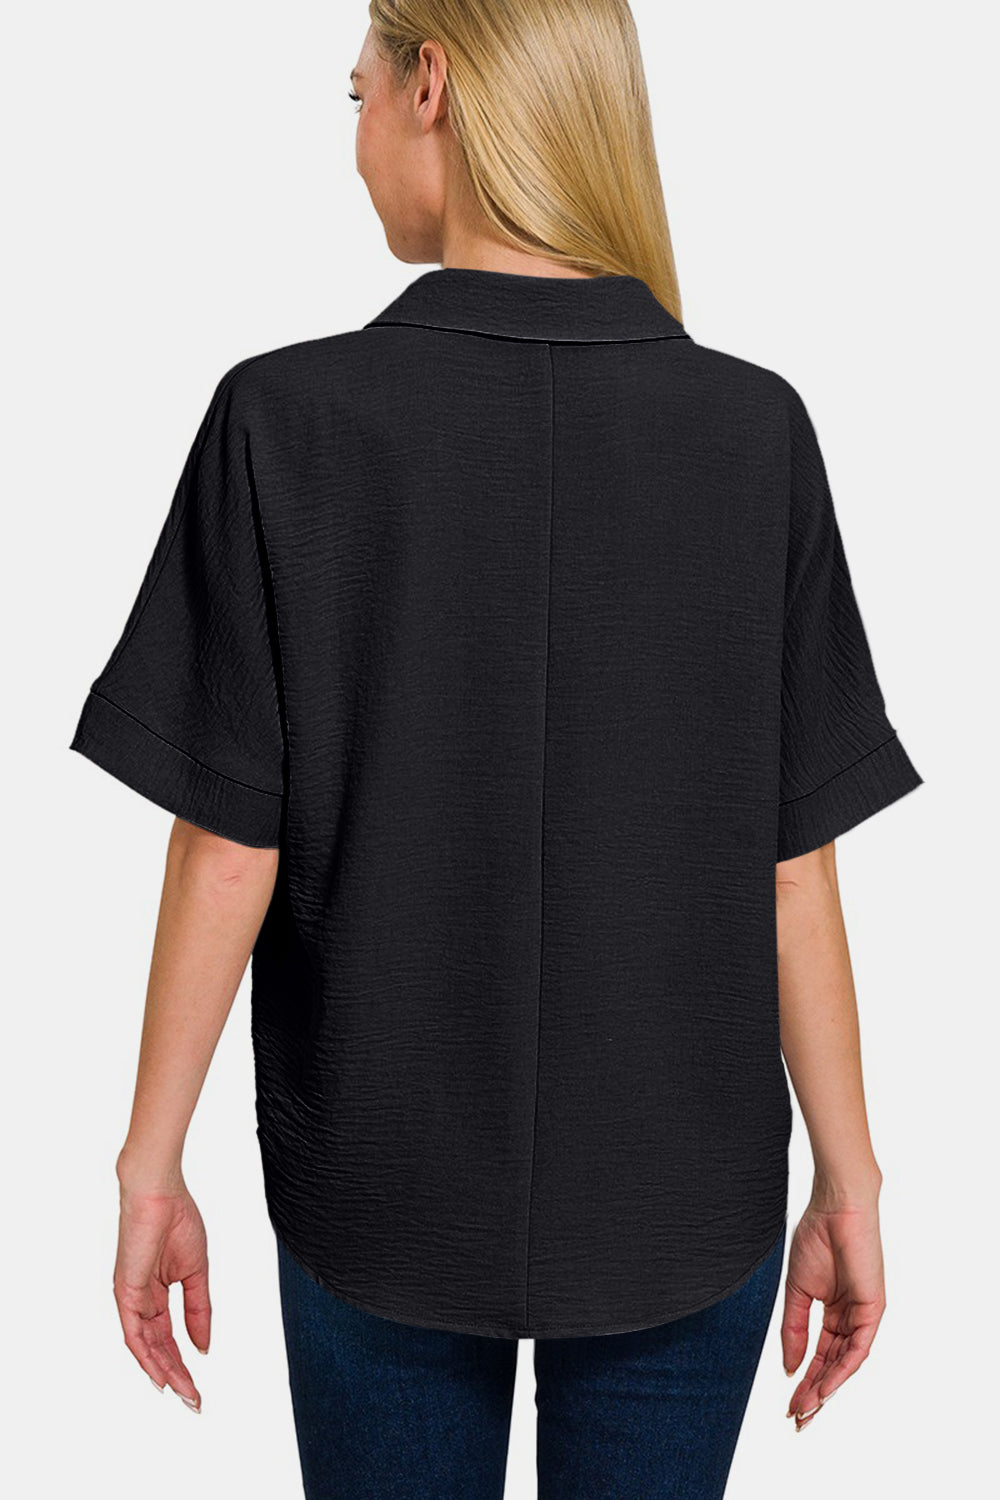 Zenana Black Airflow Textured Collared Neck Short Sleeve Top Trendsi